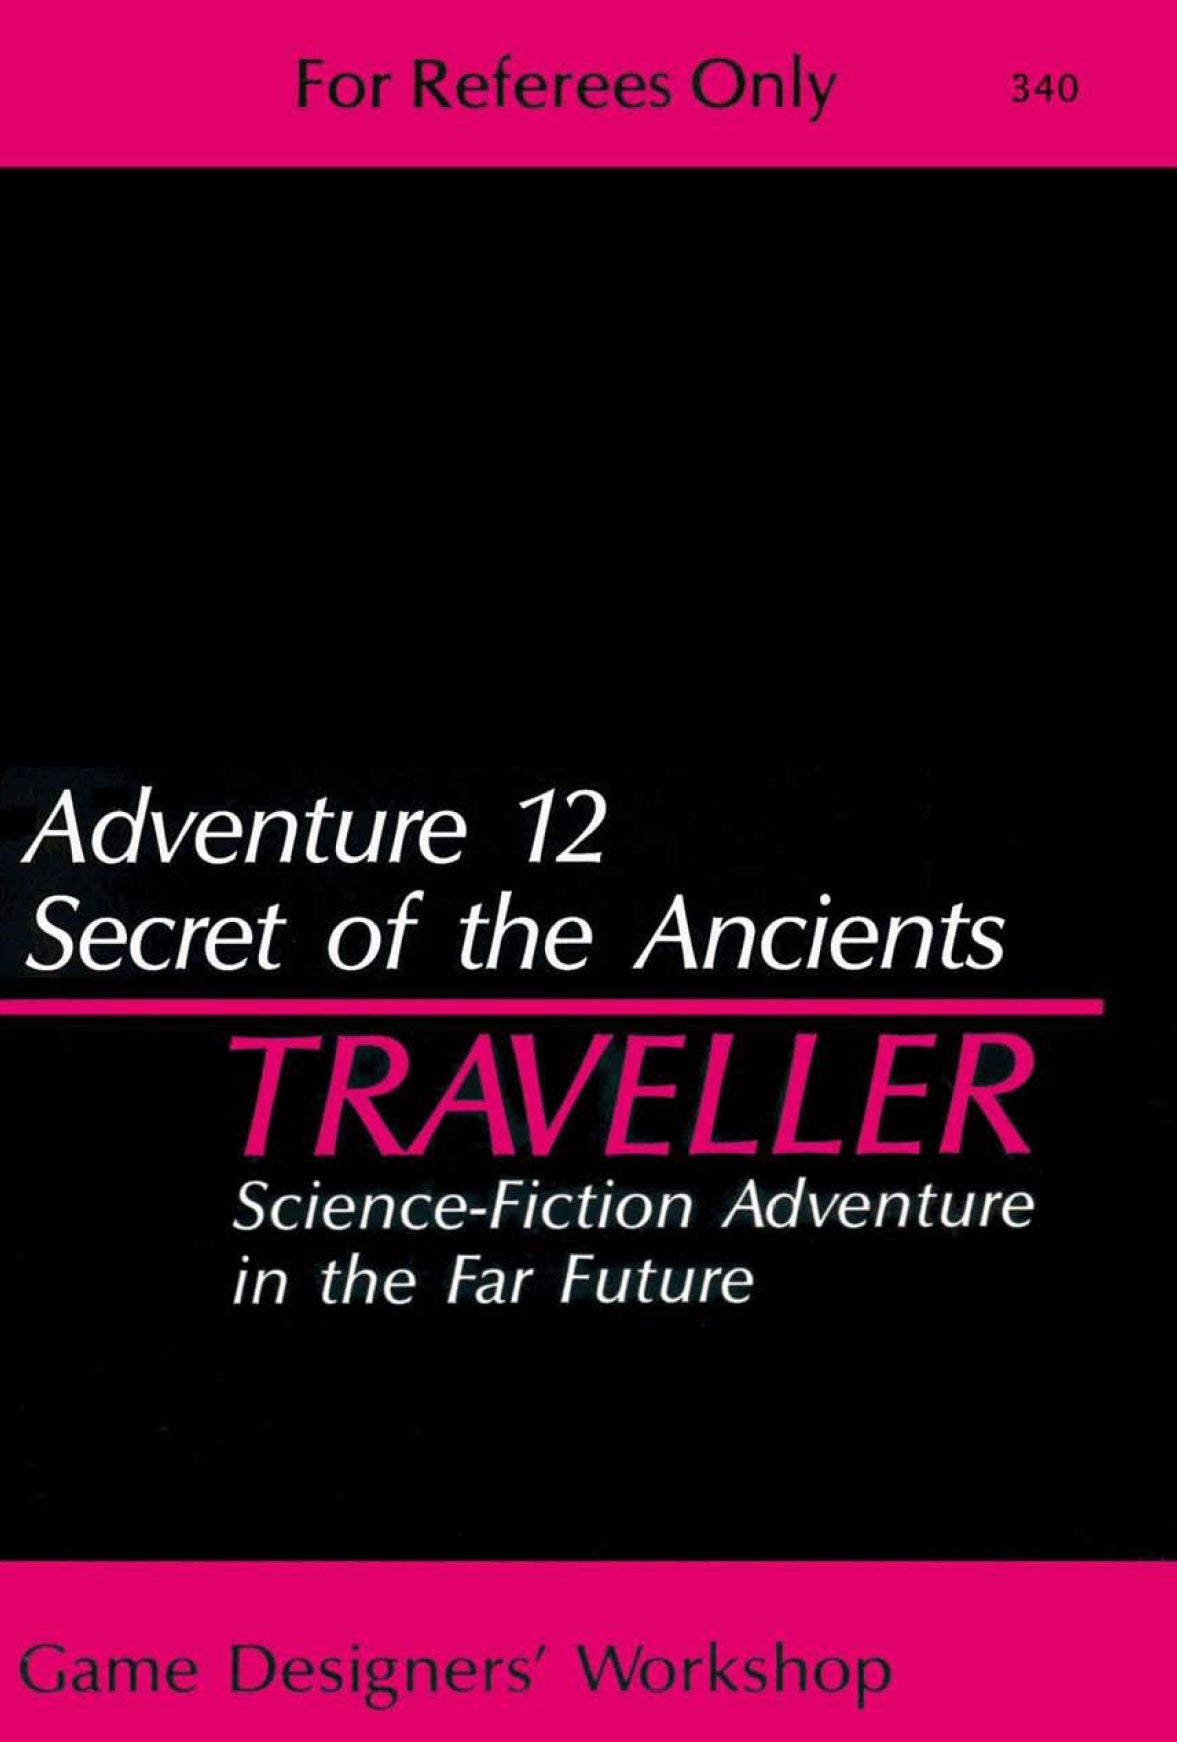 Adventure 12: Secret of the Ancients ebook